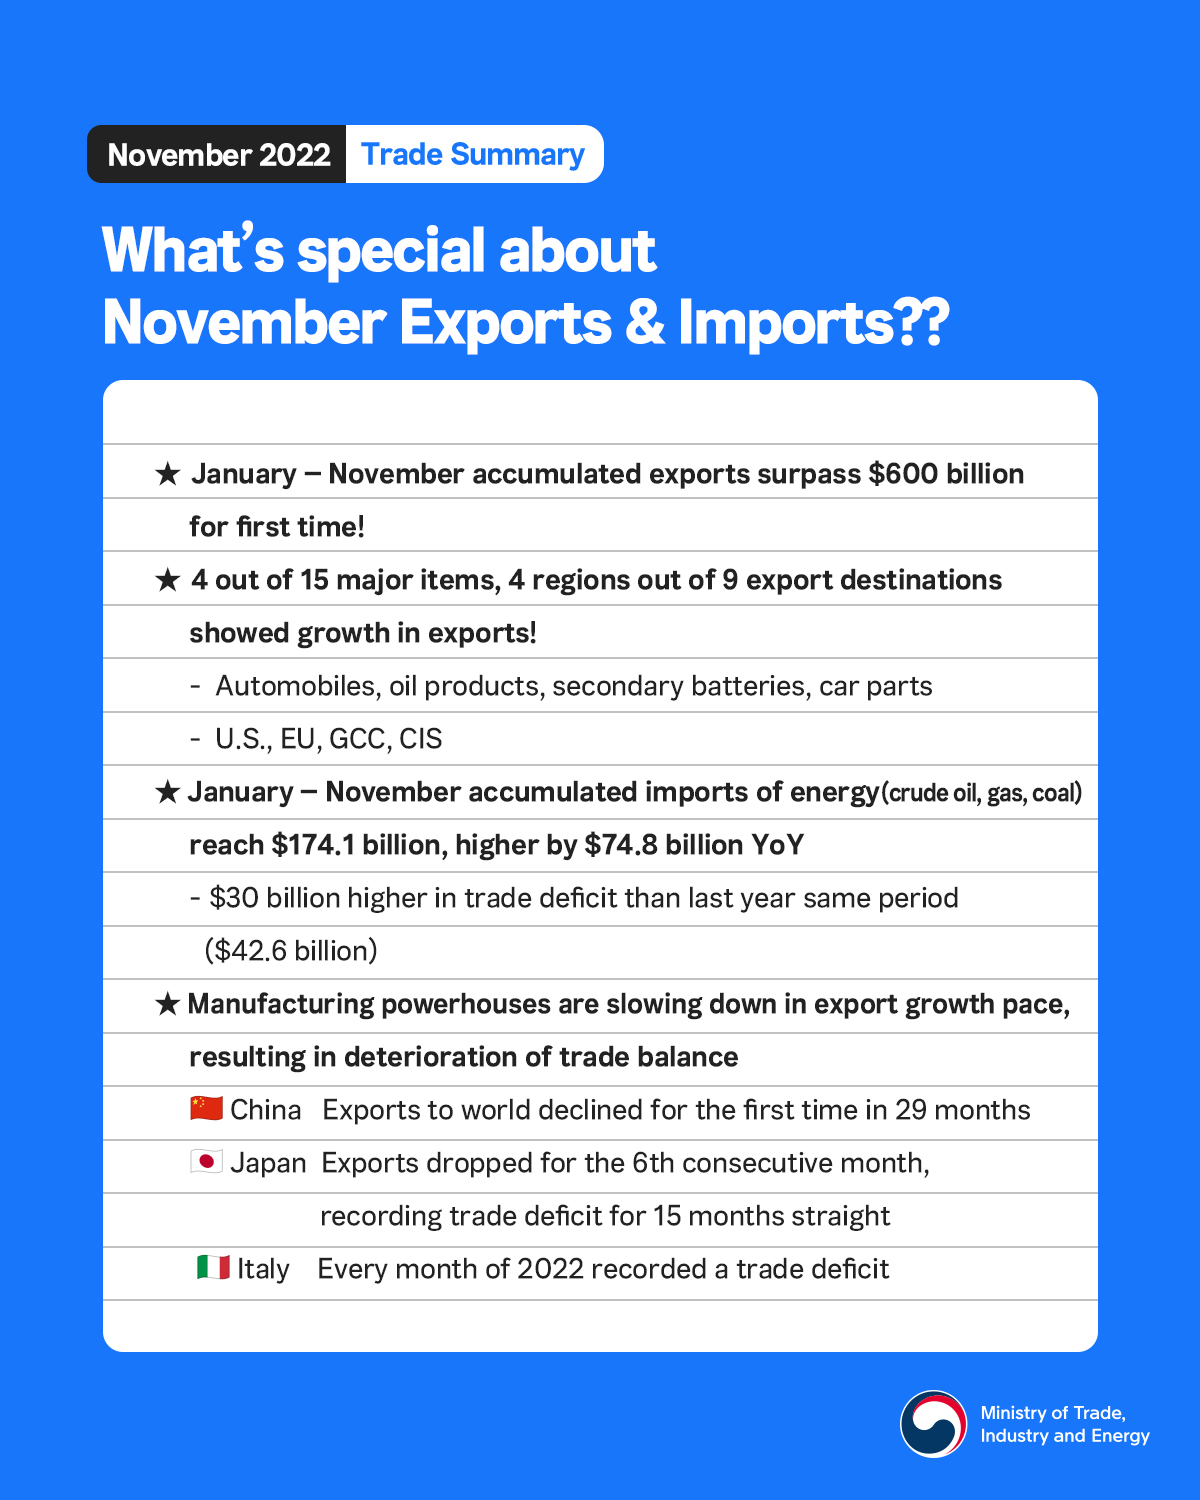 Korea's November exports surpass $600 billion for first time! Image 1